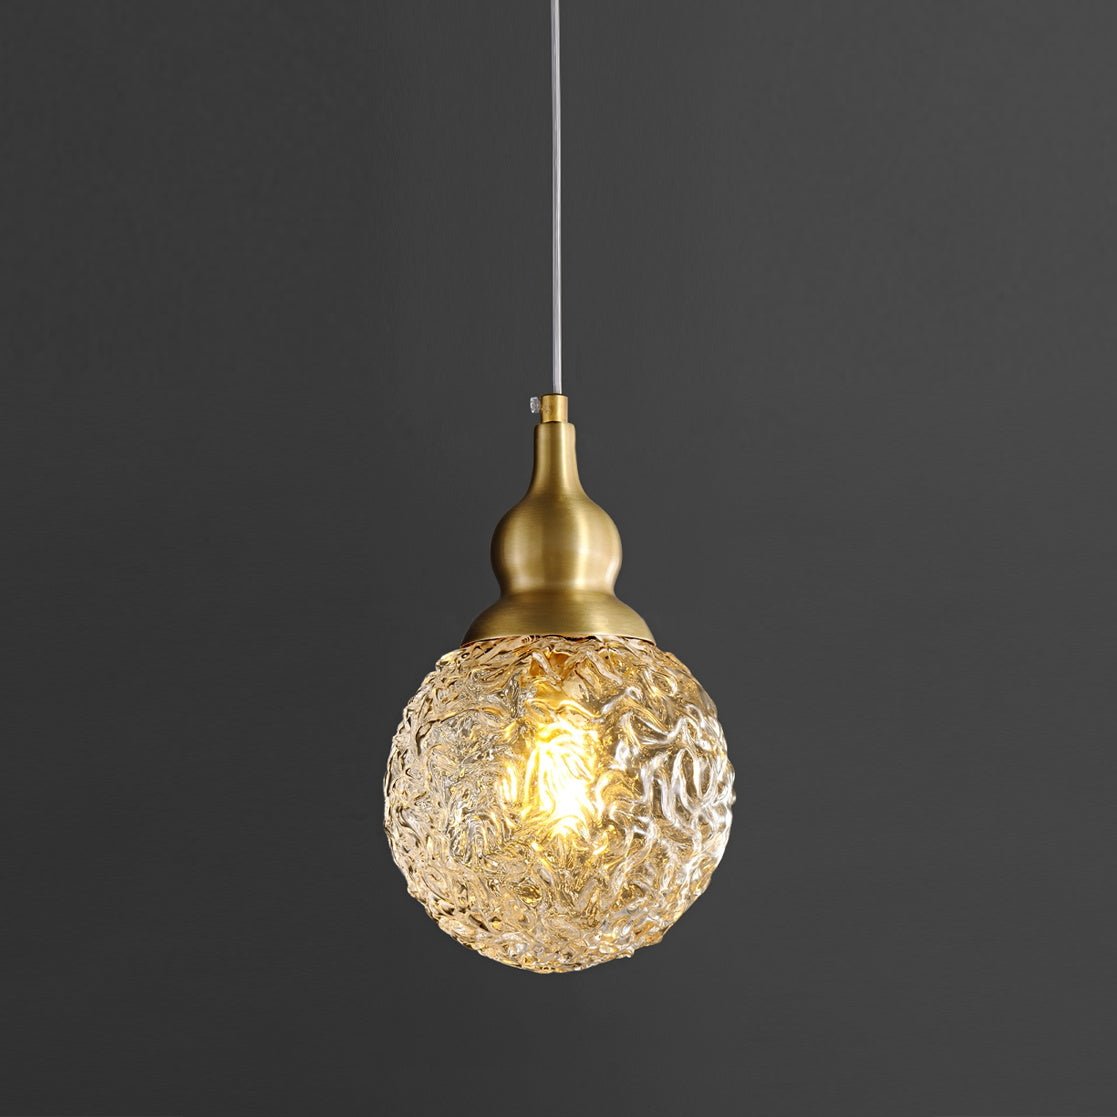 Bella Brass Pendant Light with 5.9-inch Diameter and 8.7-inch Height, or 15cm Diameter and 22cm Height, Opaque Brass Finish, Emitting Cool Light